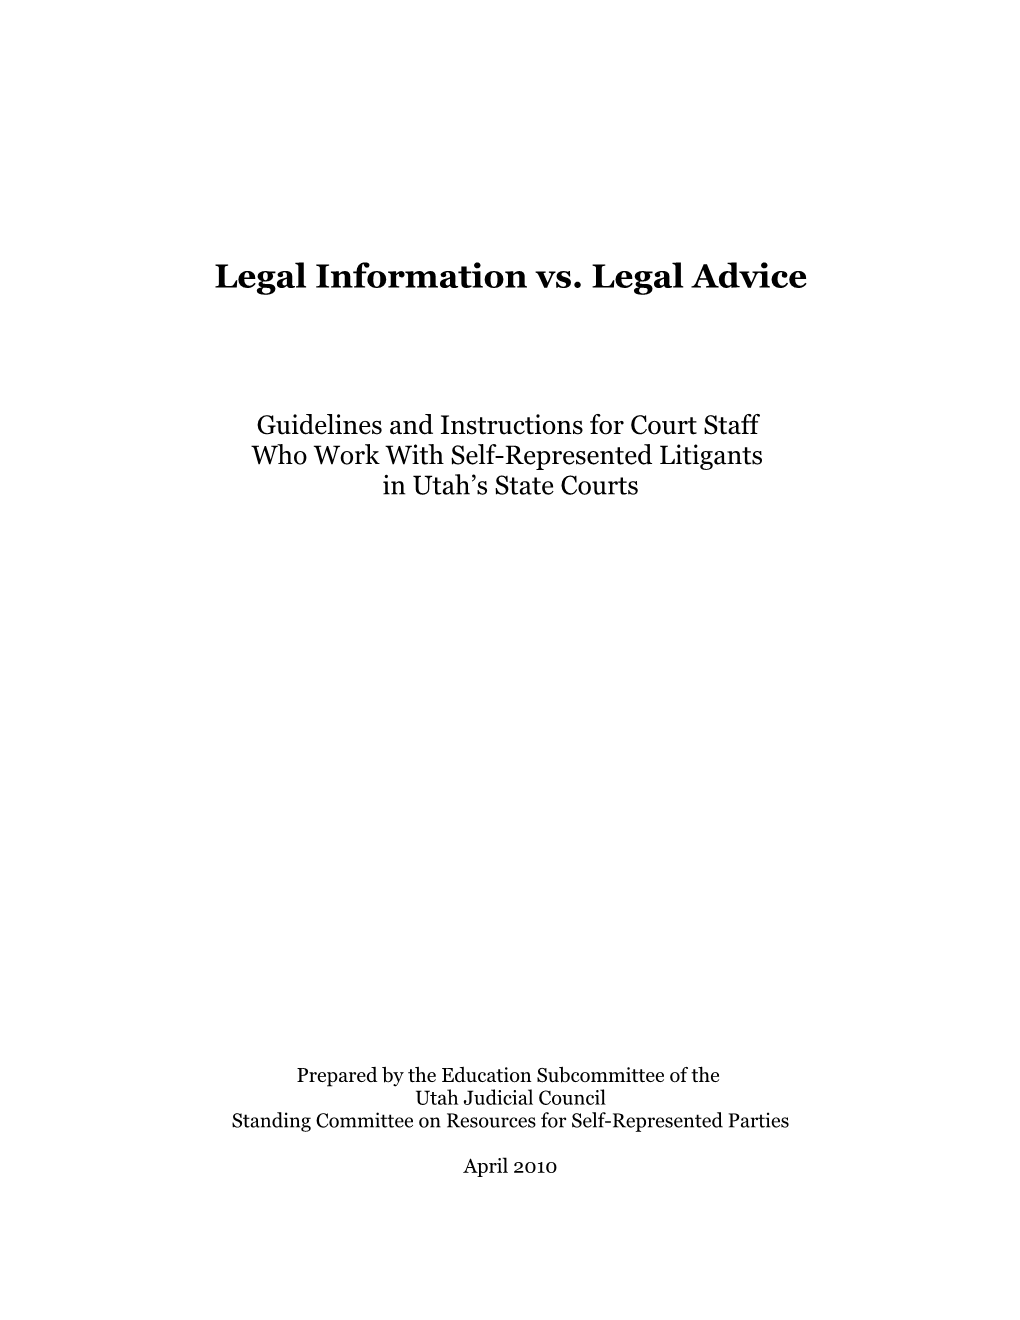 Legal Information Vs. Legal Advice